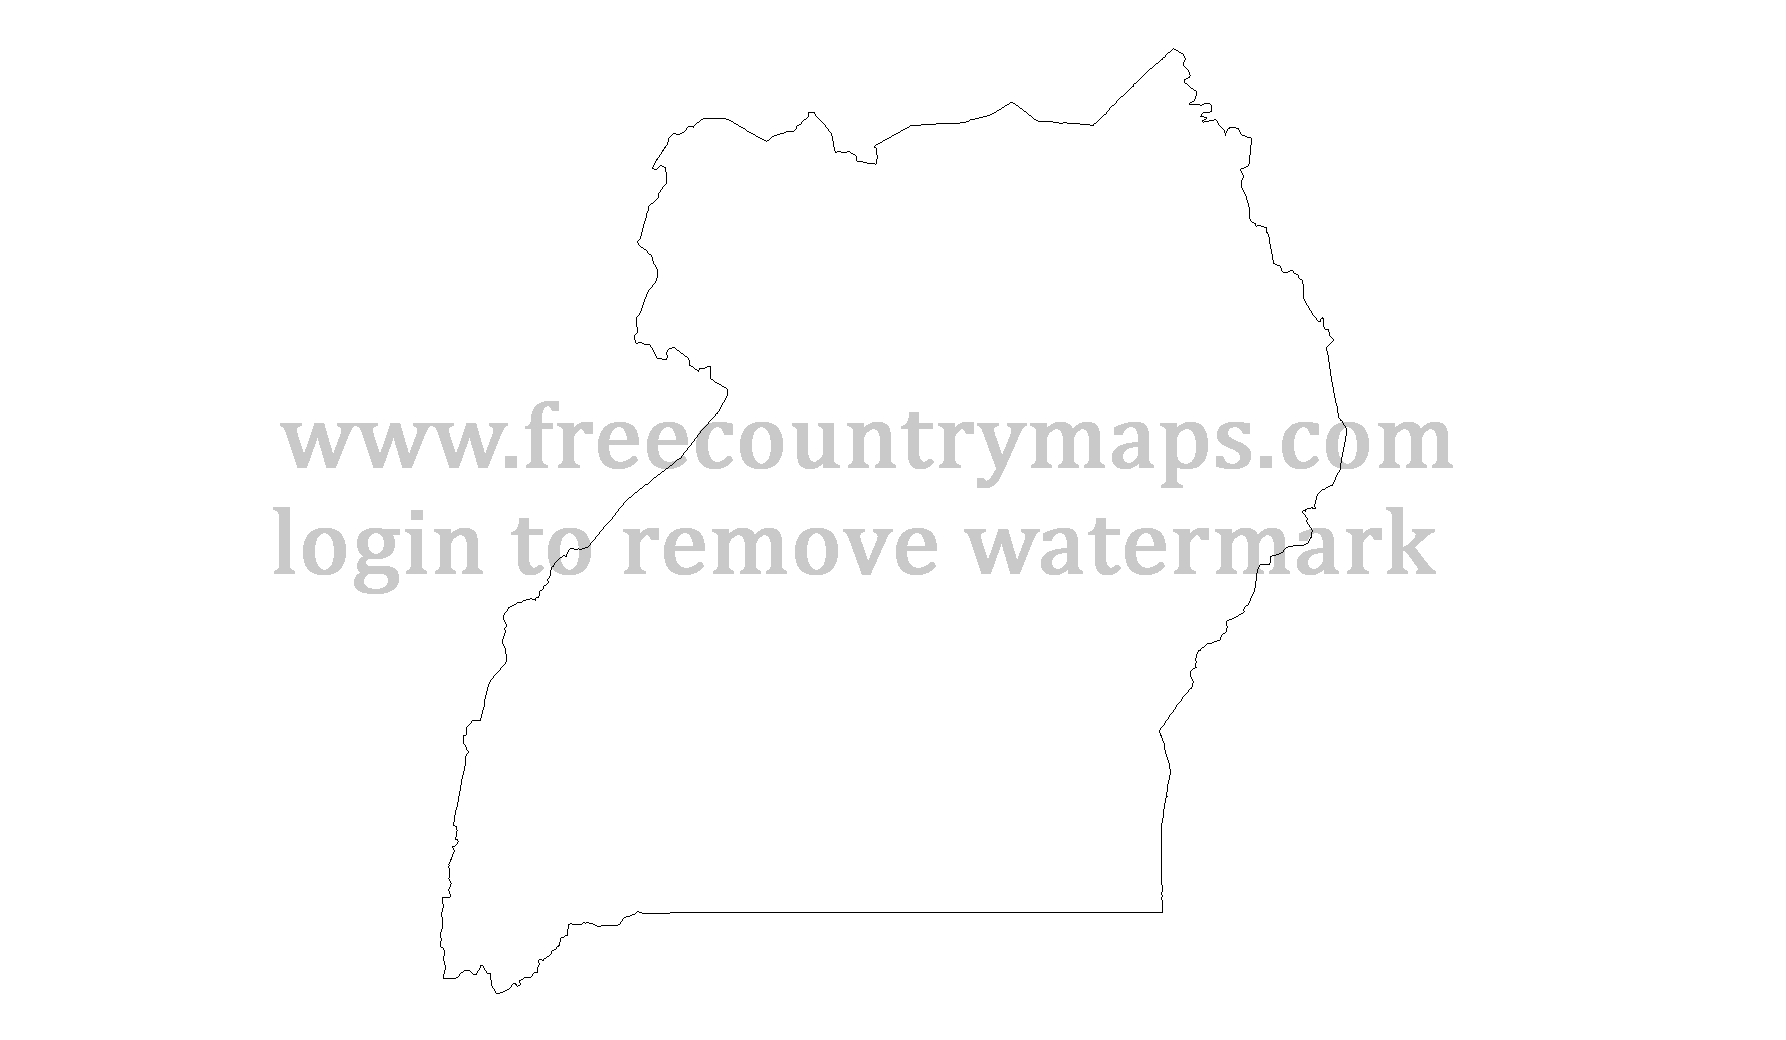 Outline Map of Uganda